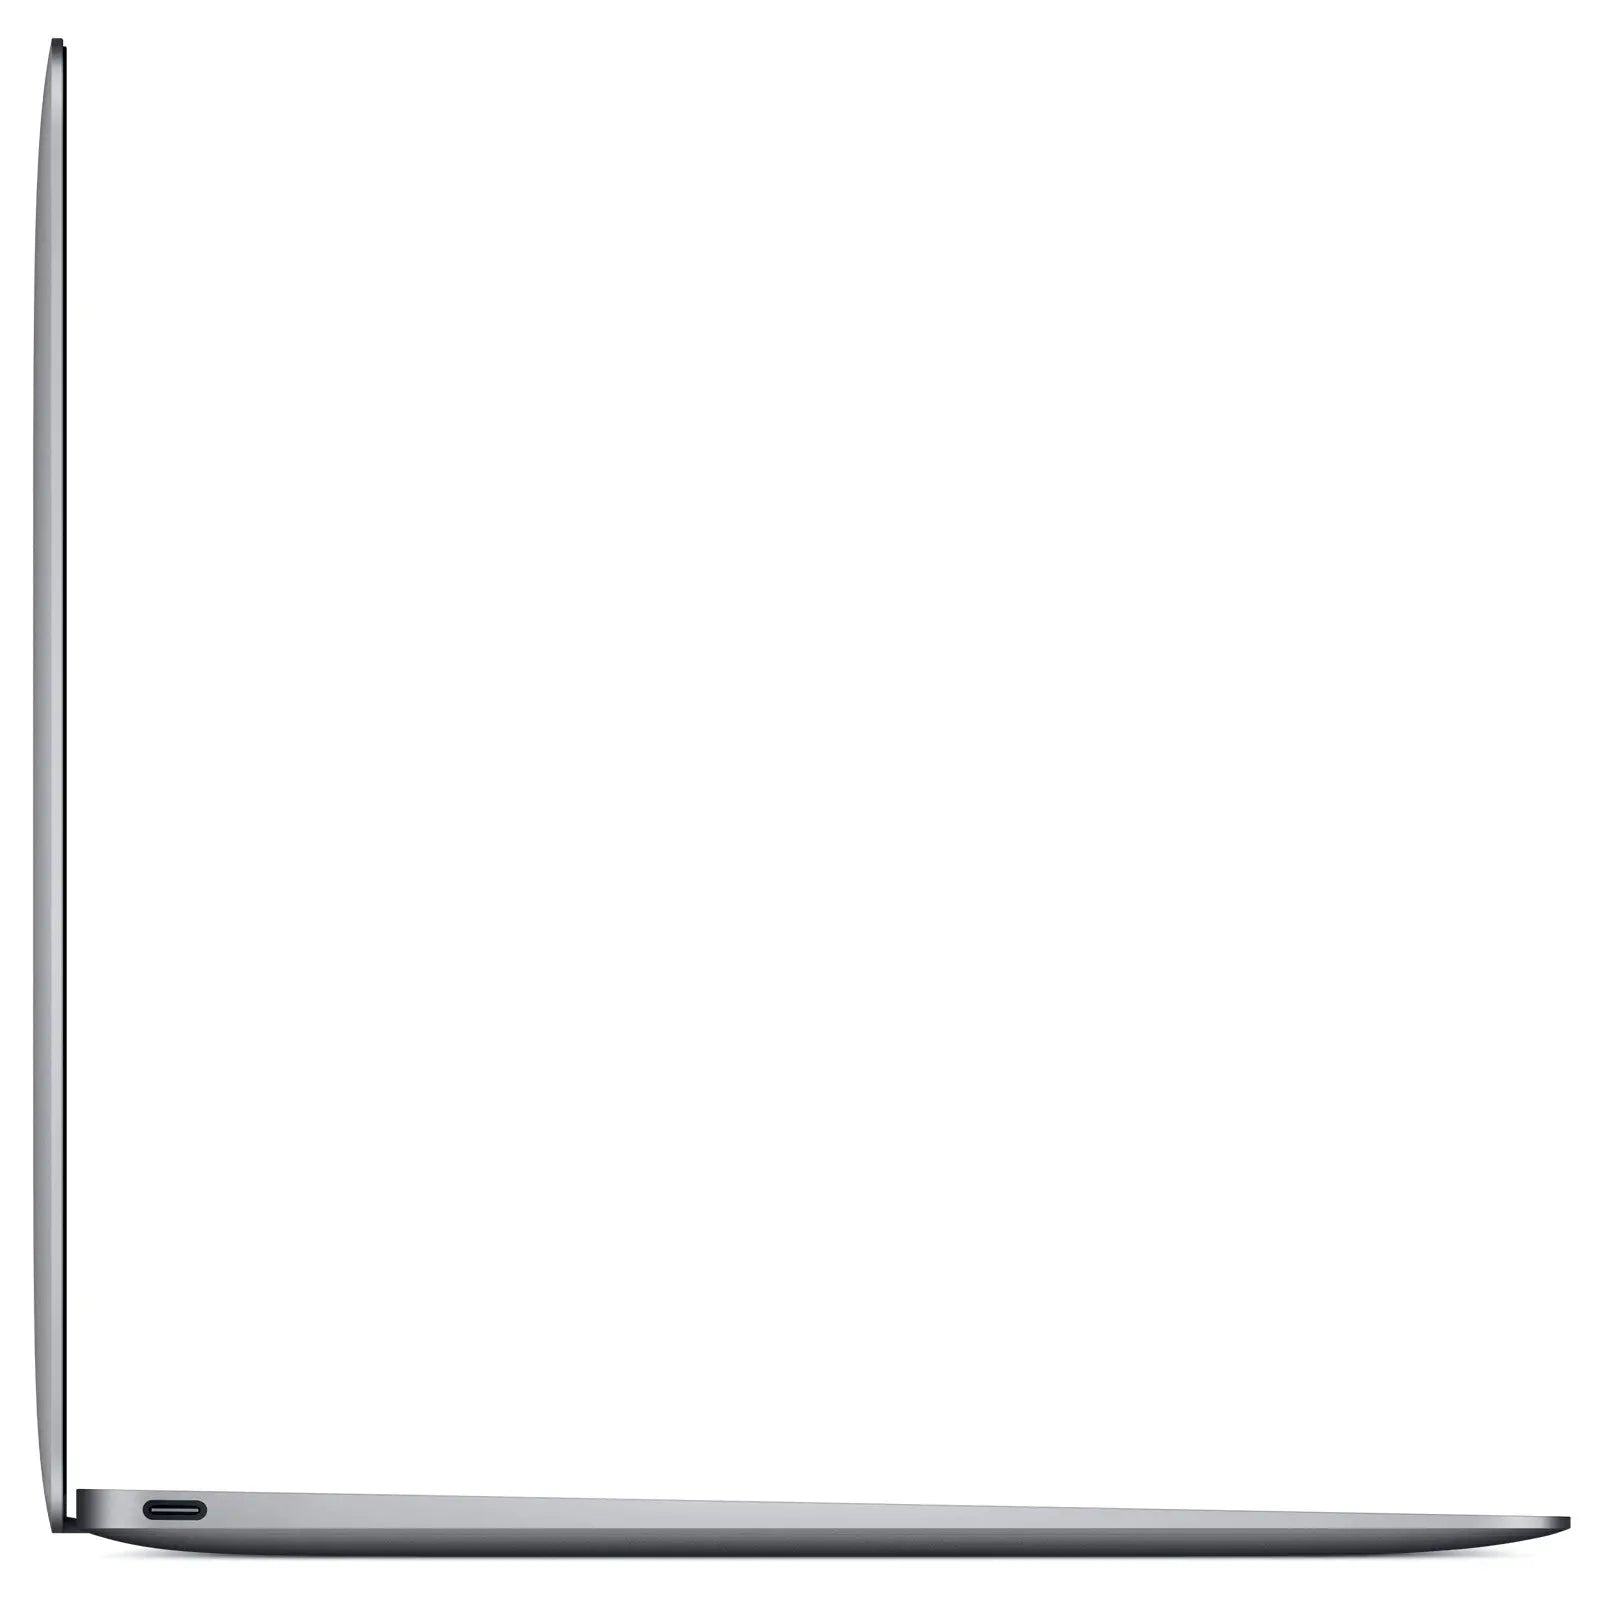 Apple MacBook 12" 512 Go SSD 8 Go RAM Intel  à 1.3 GHz  MNYG2FN/A 0190198202864 Apple Computer, Inc